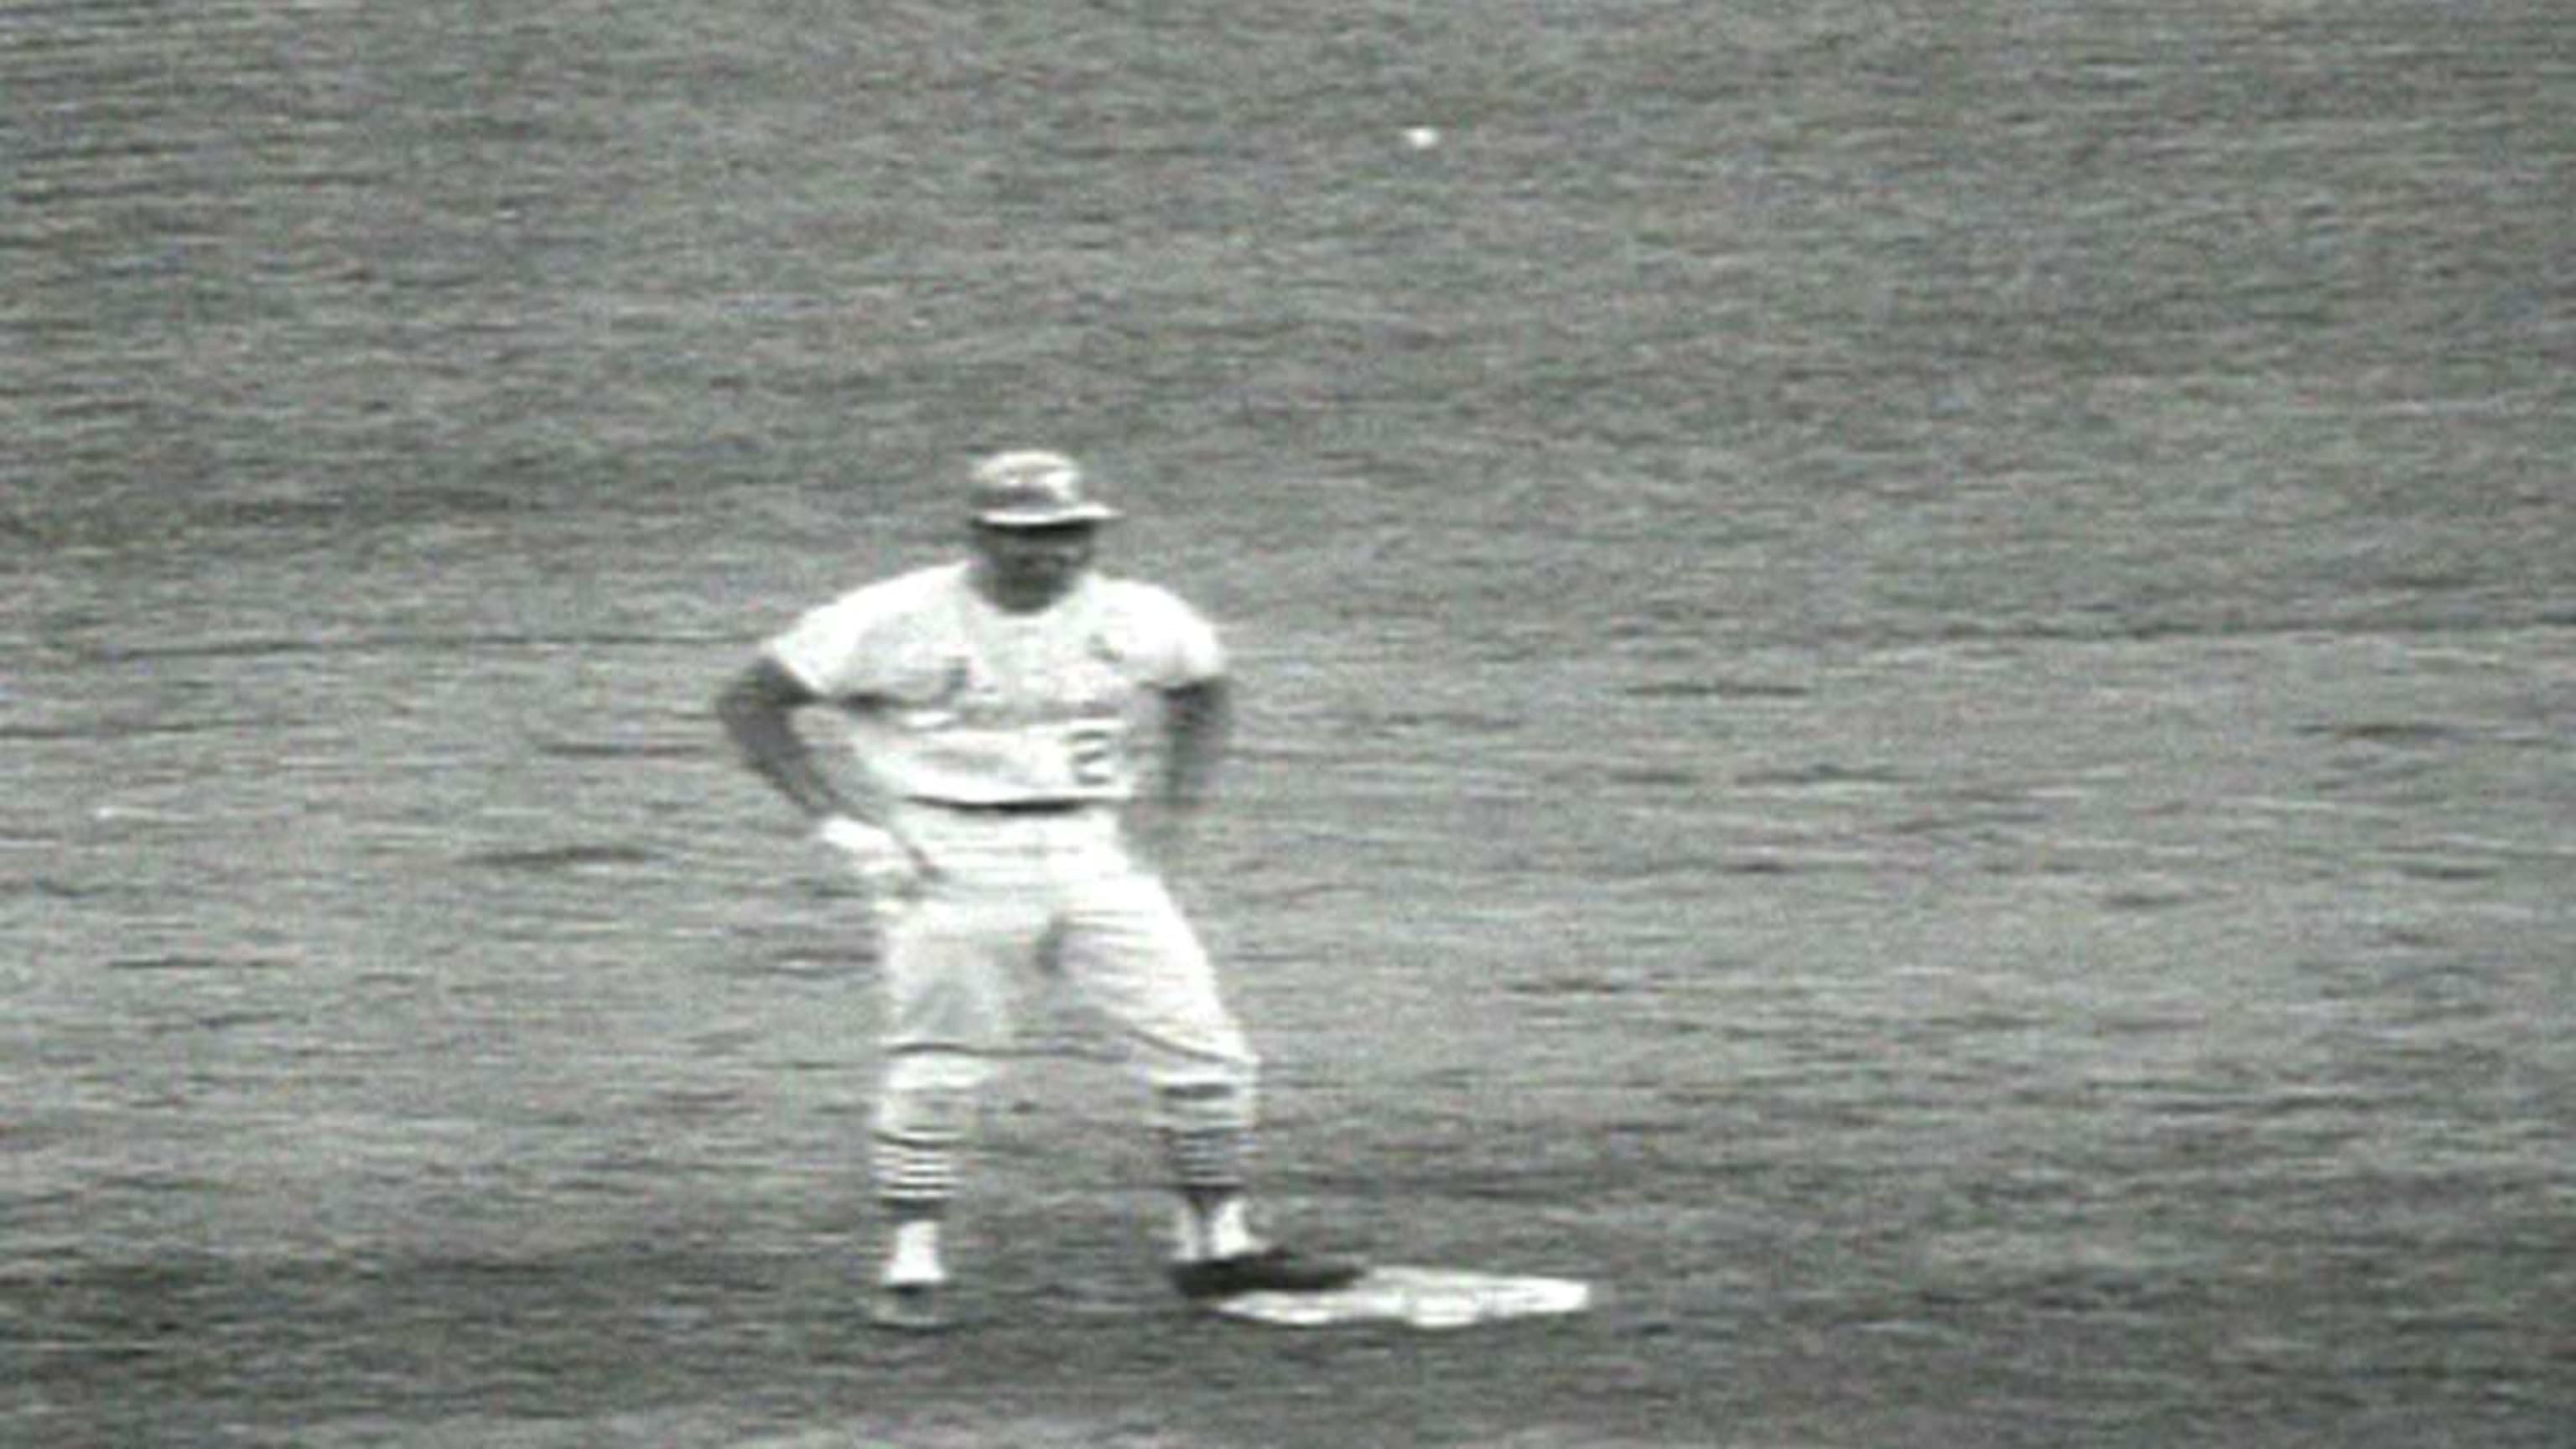 1968 World Series recap